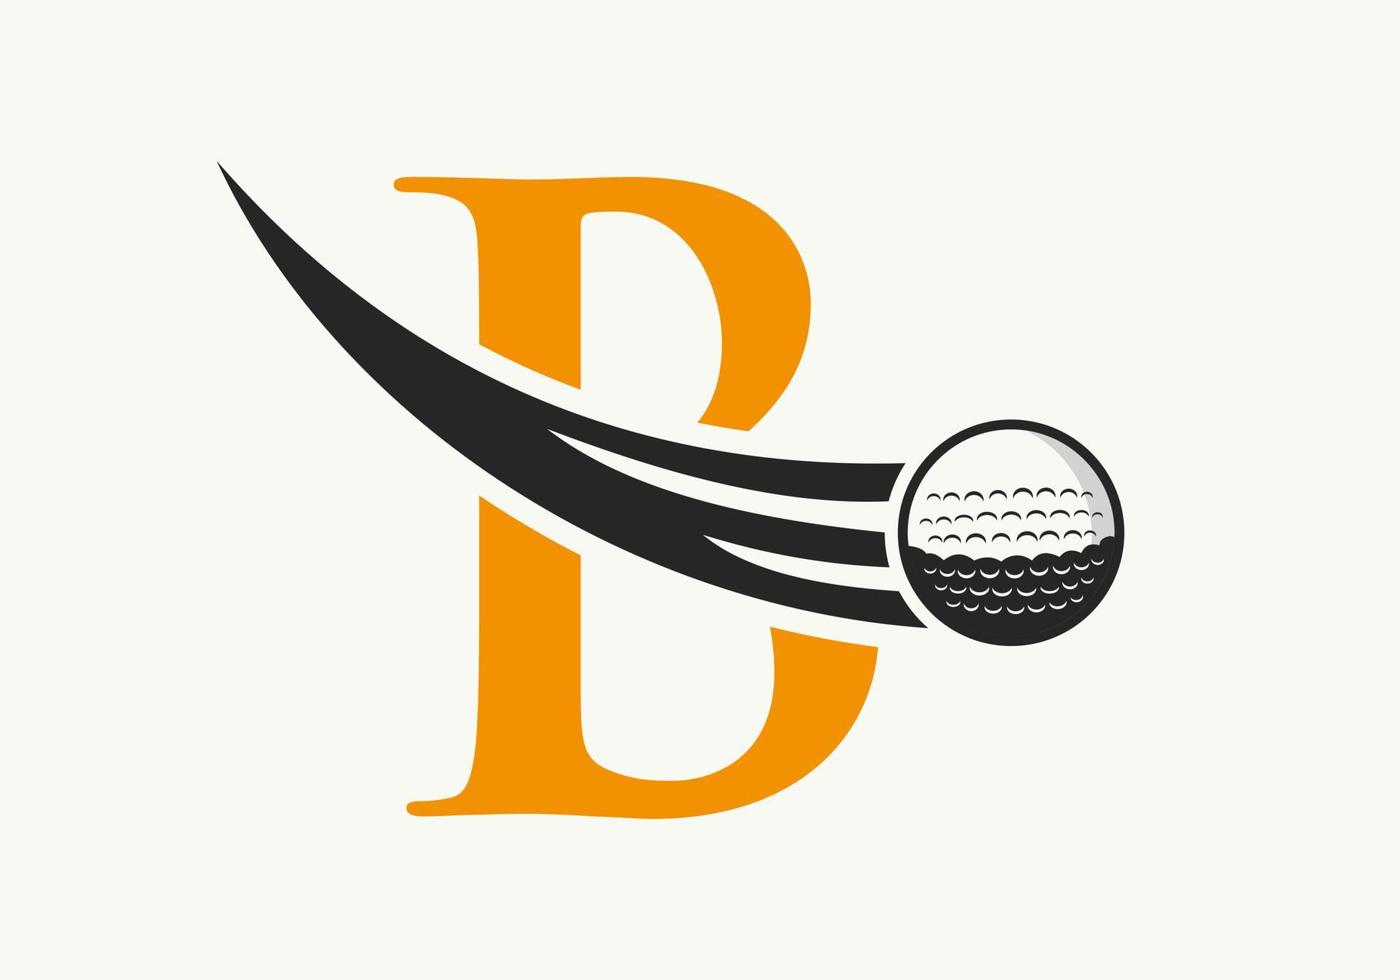 brief b golf logo ontwerp sjabloon. hockey sport academie teken, club symbool vector